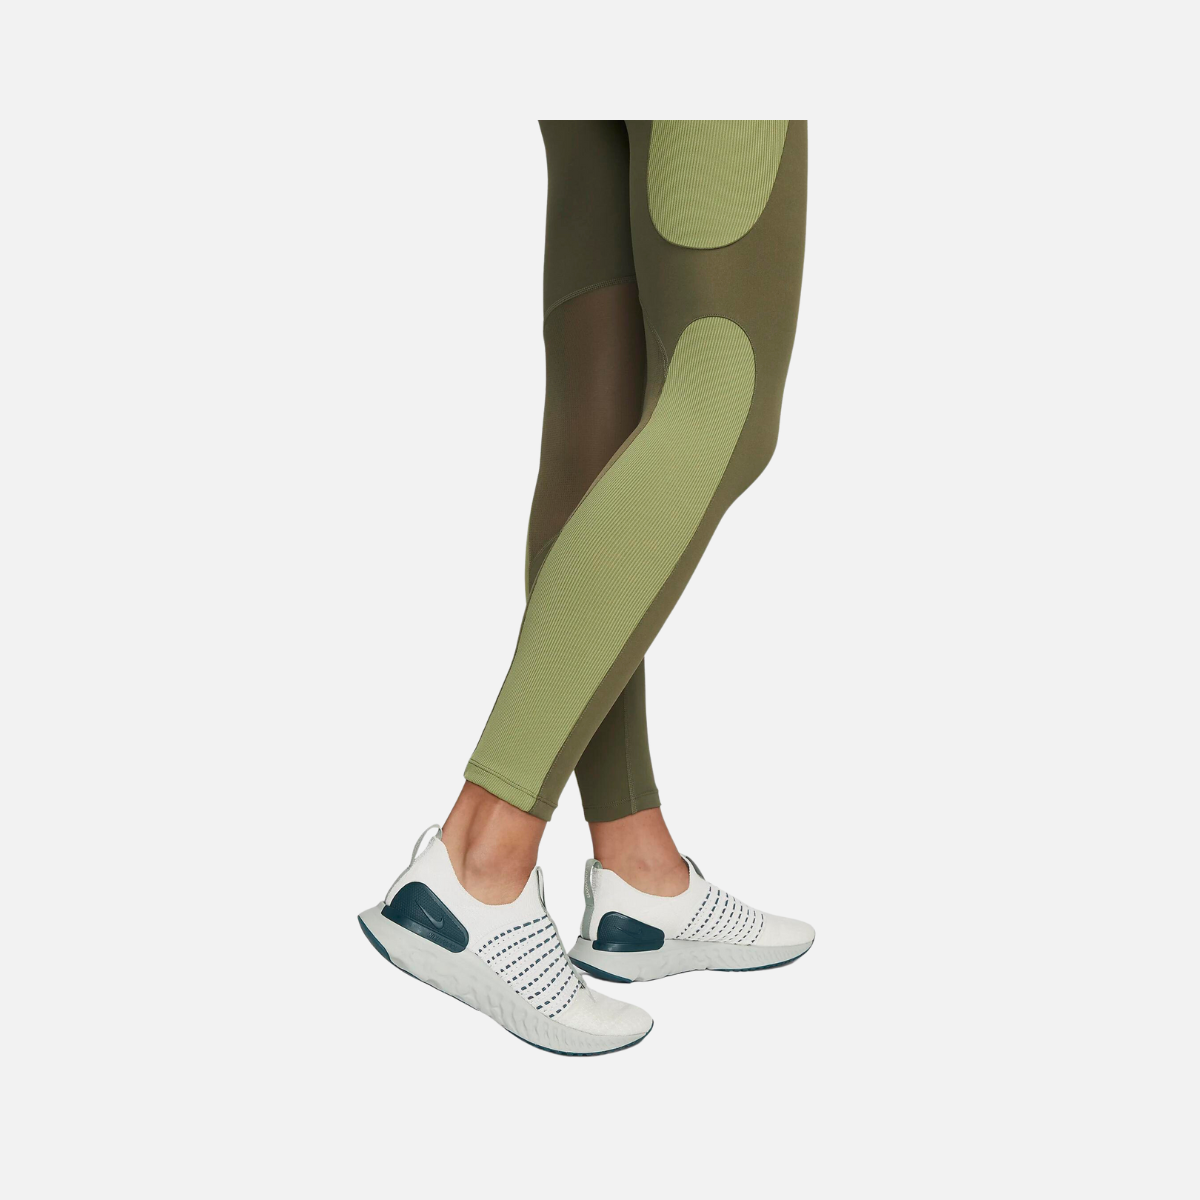 Nike air fast mid-rise 7/8 Women's running leggings with pockets -Medium Olive/Alligator